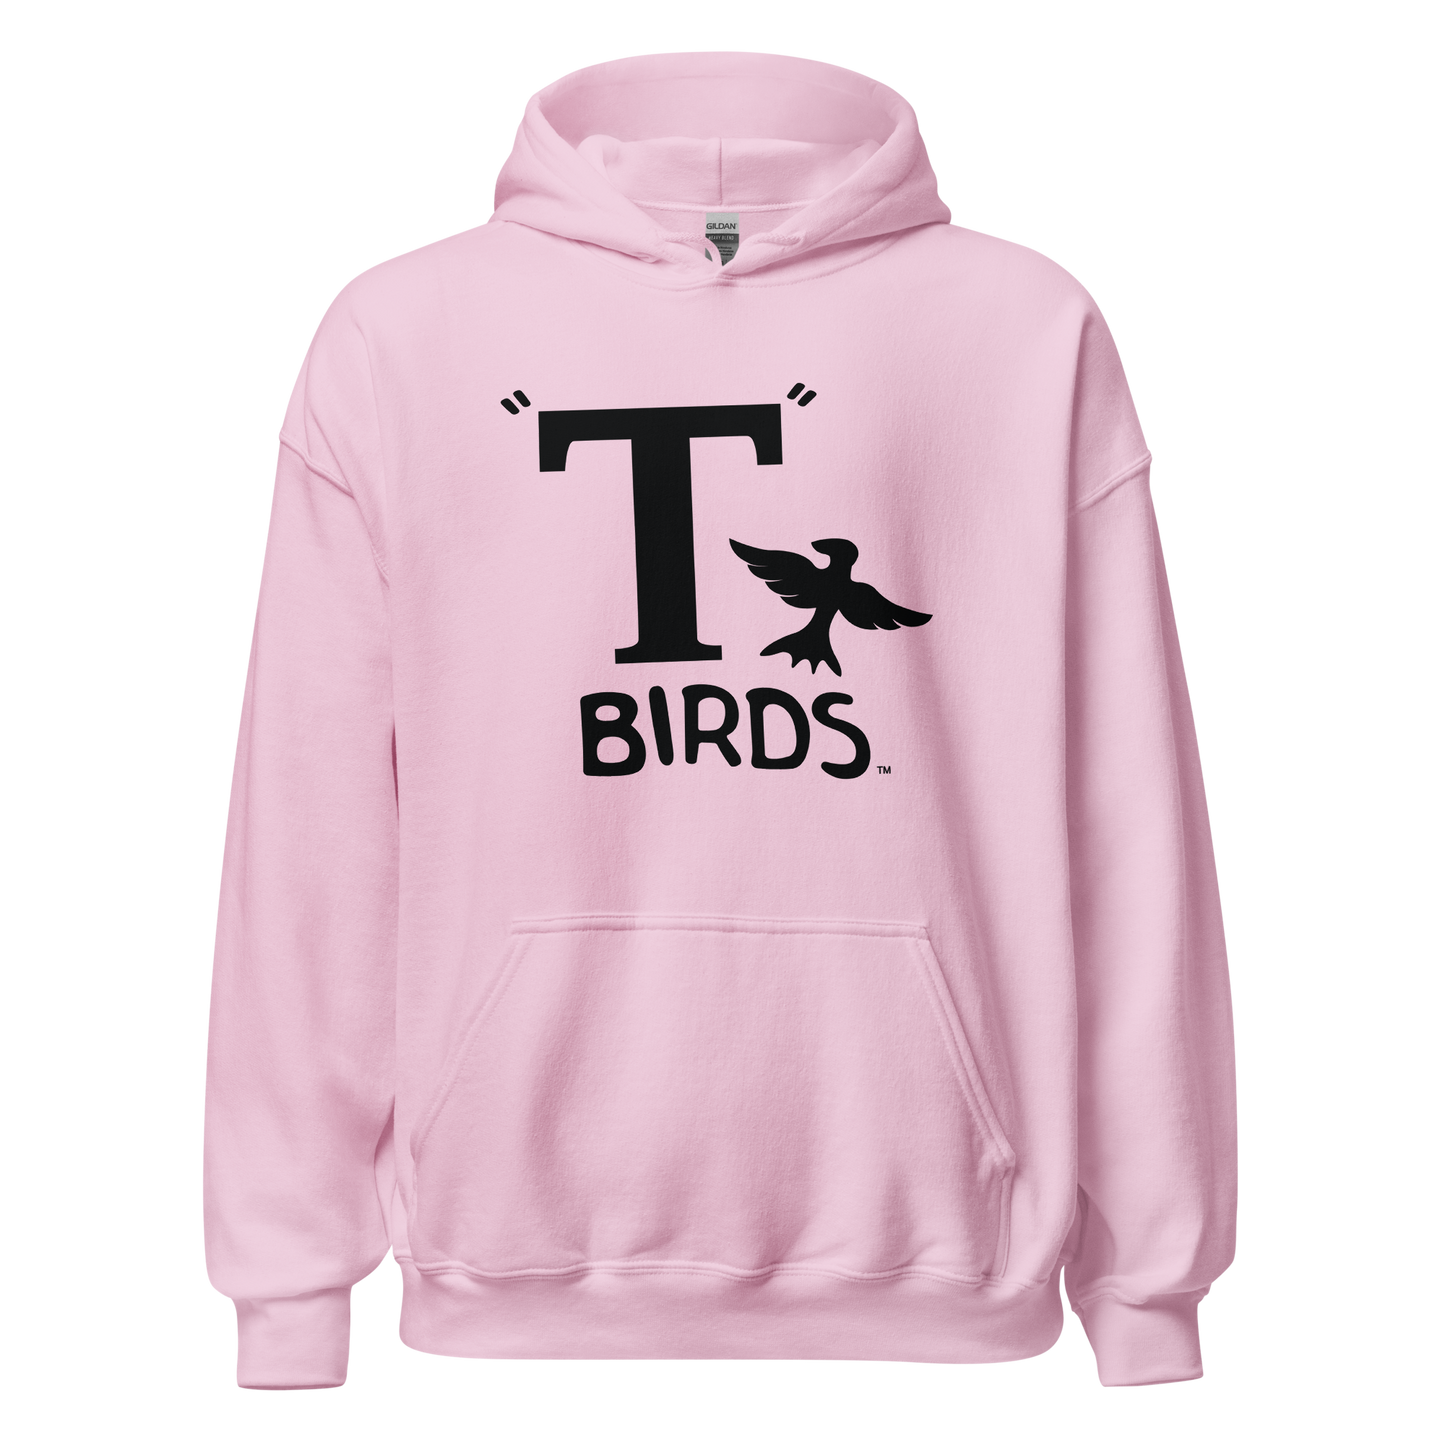 Grease T-Birds Hooded Sweatshirt